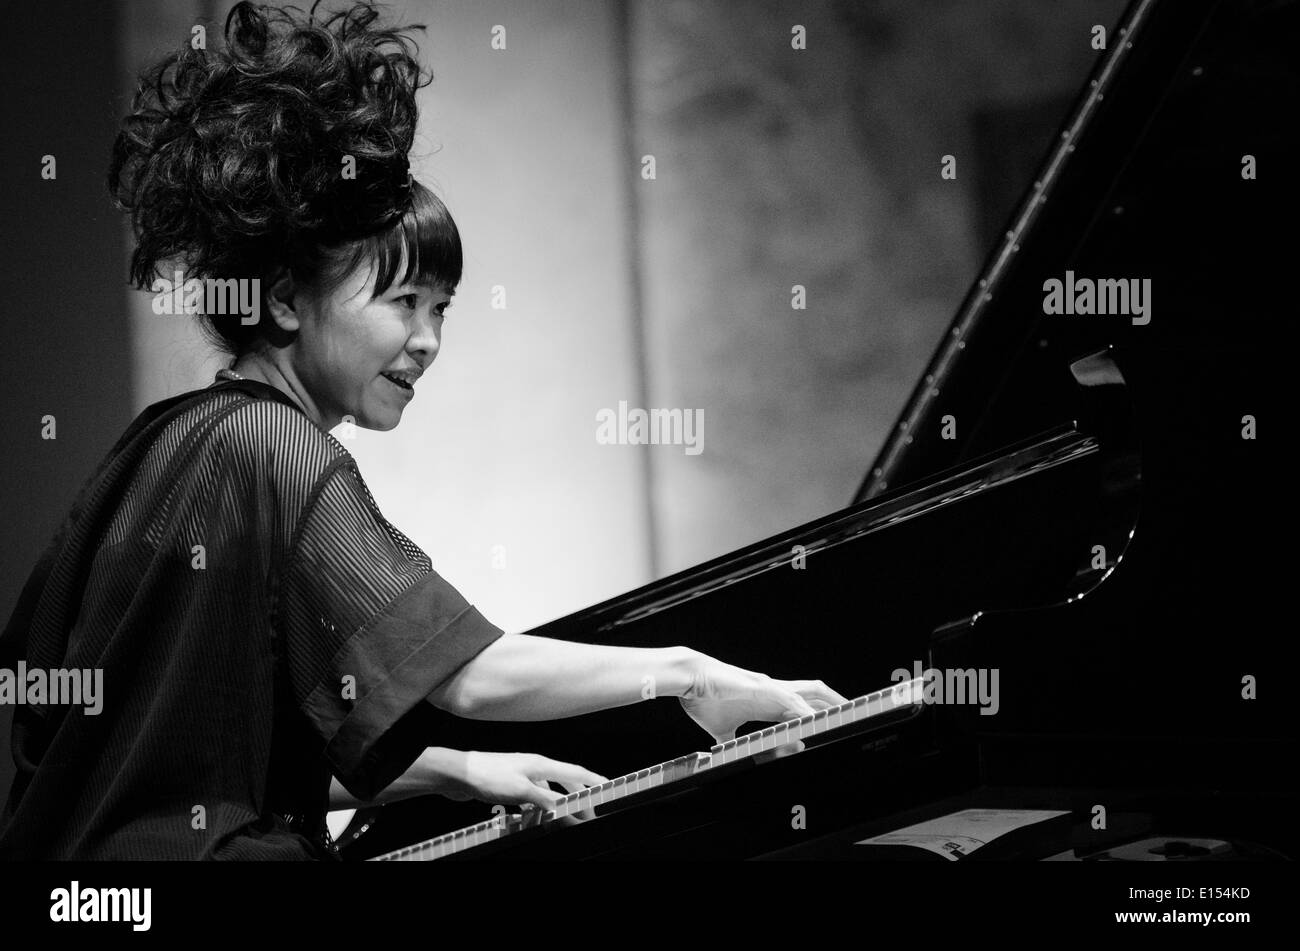 Hiromi Uehara playing piano at jazz concert Stock Photo - Alamy